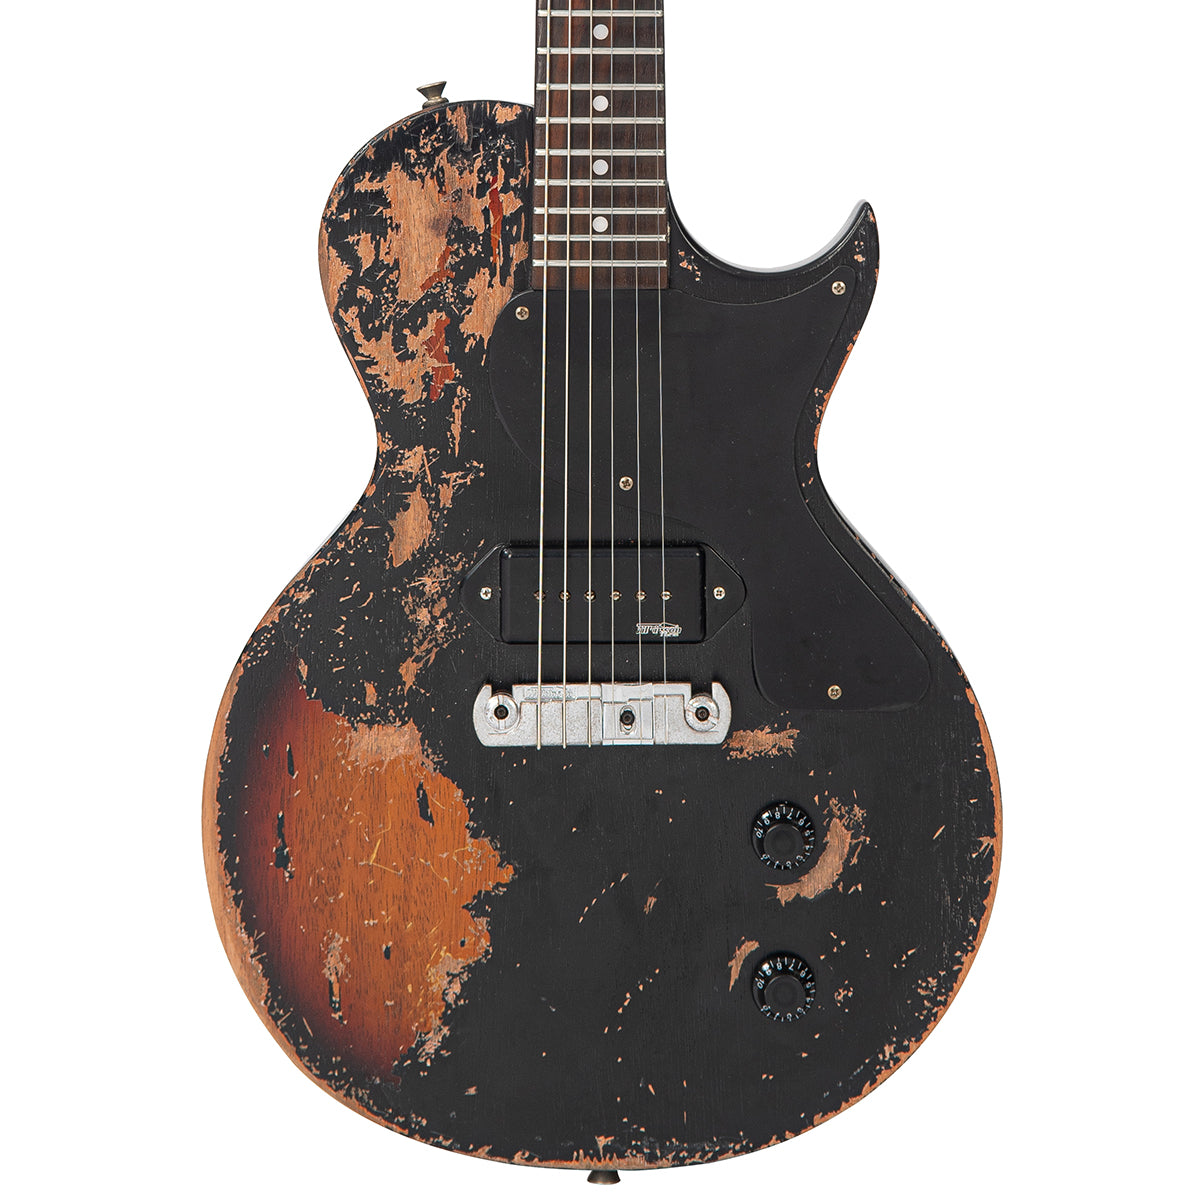 SOLD - Vintage V120 ProShop Custom Build ~ Heavy Distressed / Black (Contact: Richards Guitars. www.rguitars.co.uk), Electric Guitars for sale at Richards Guitars.